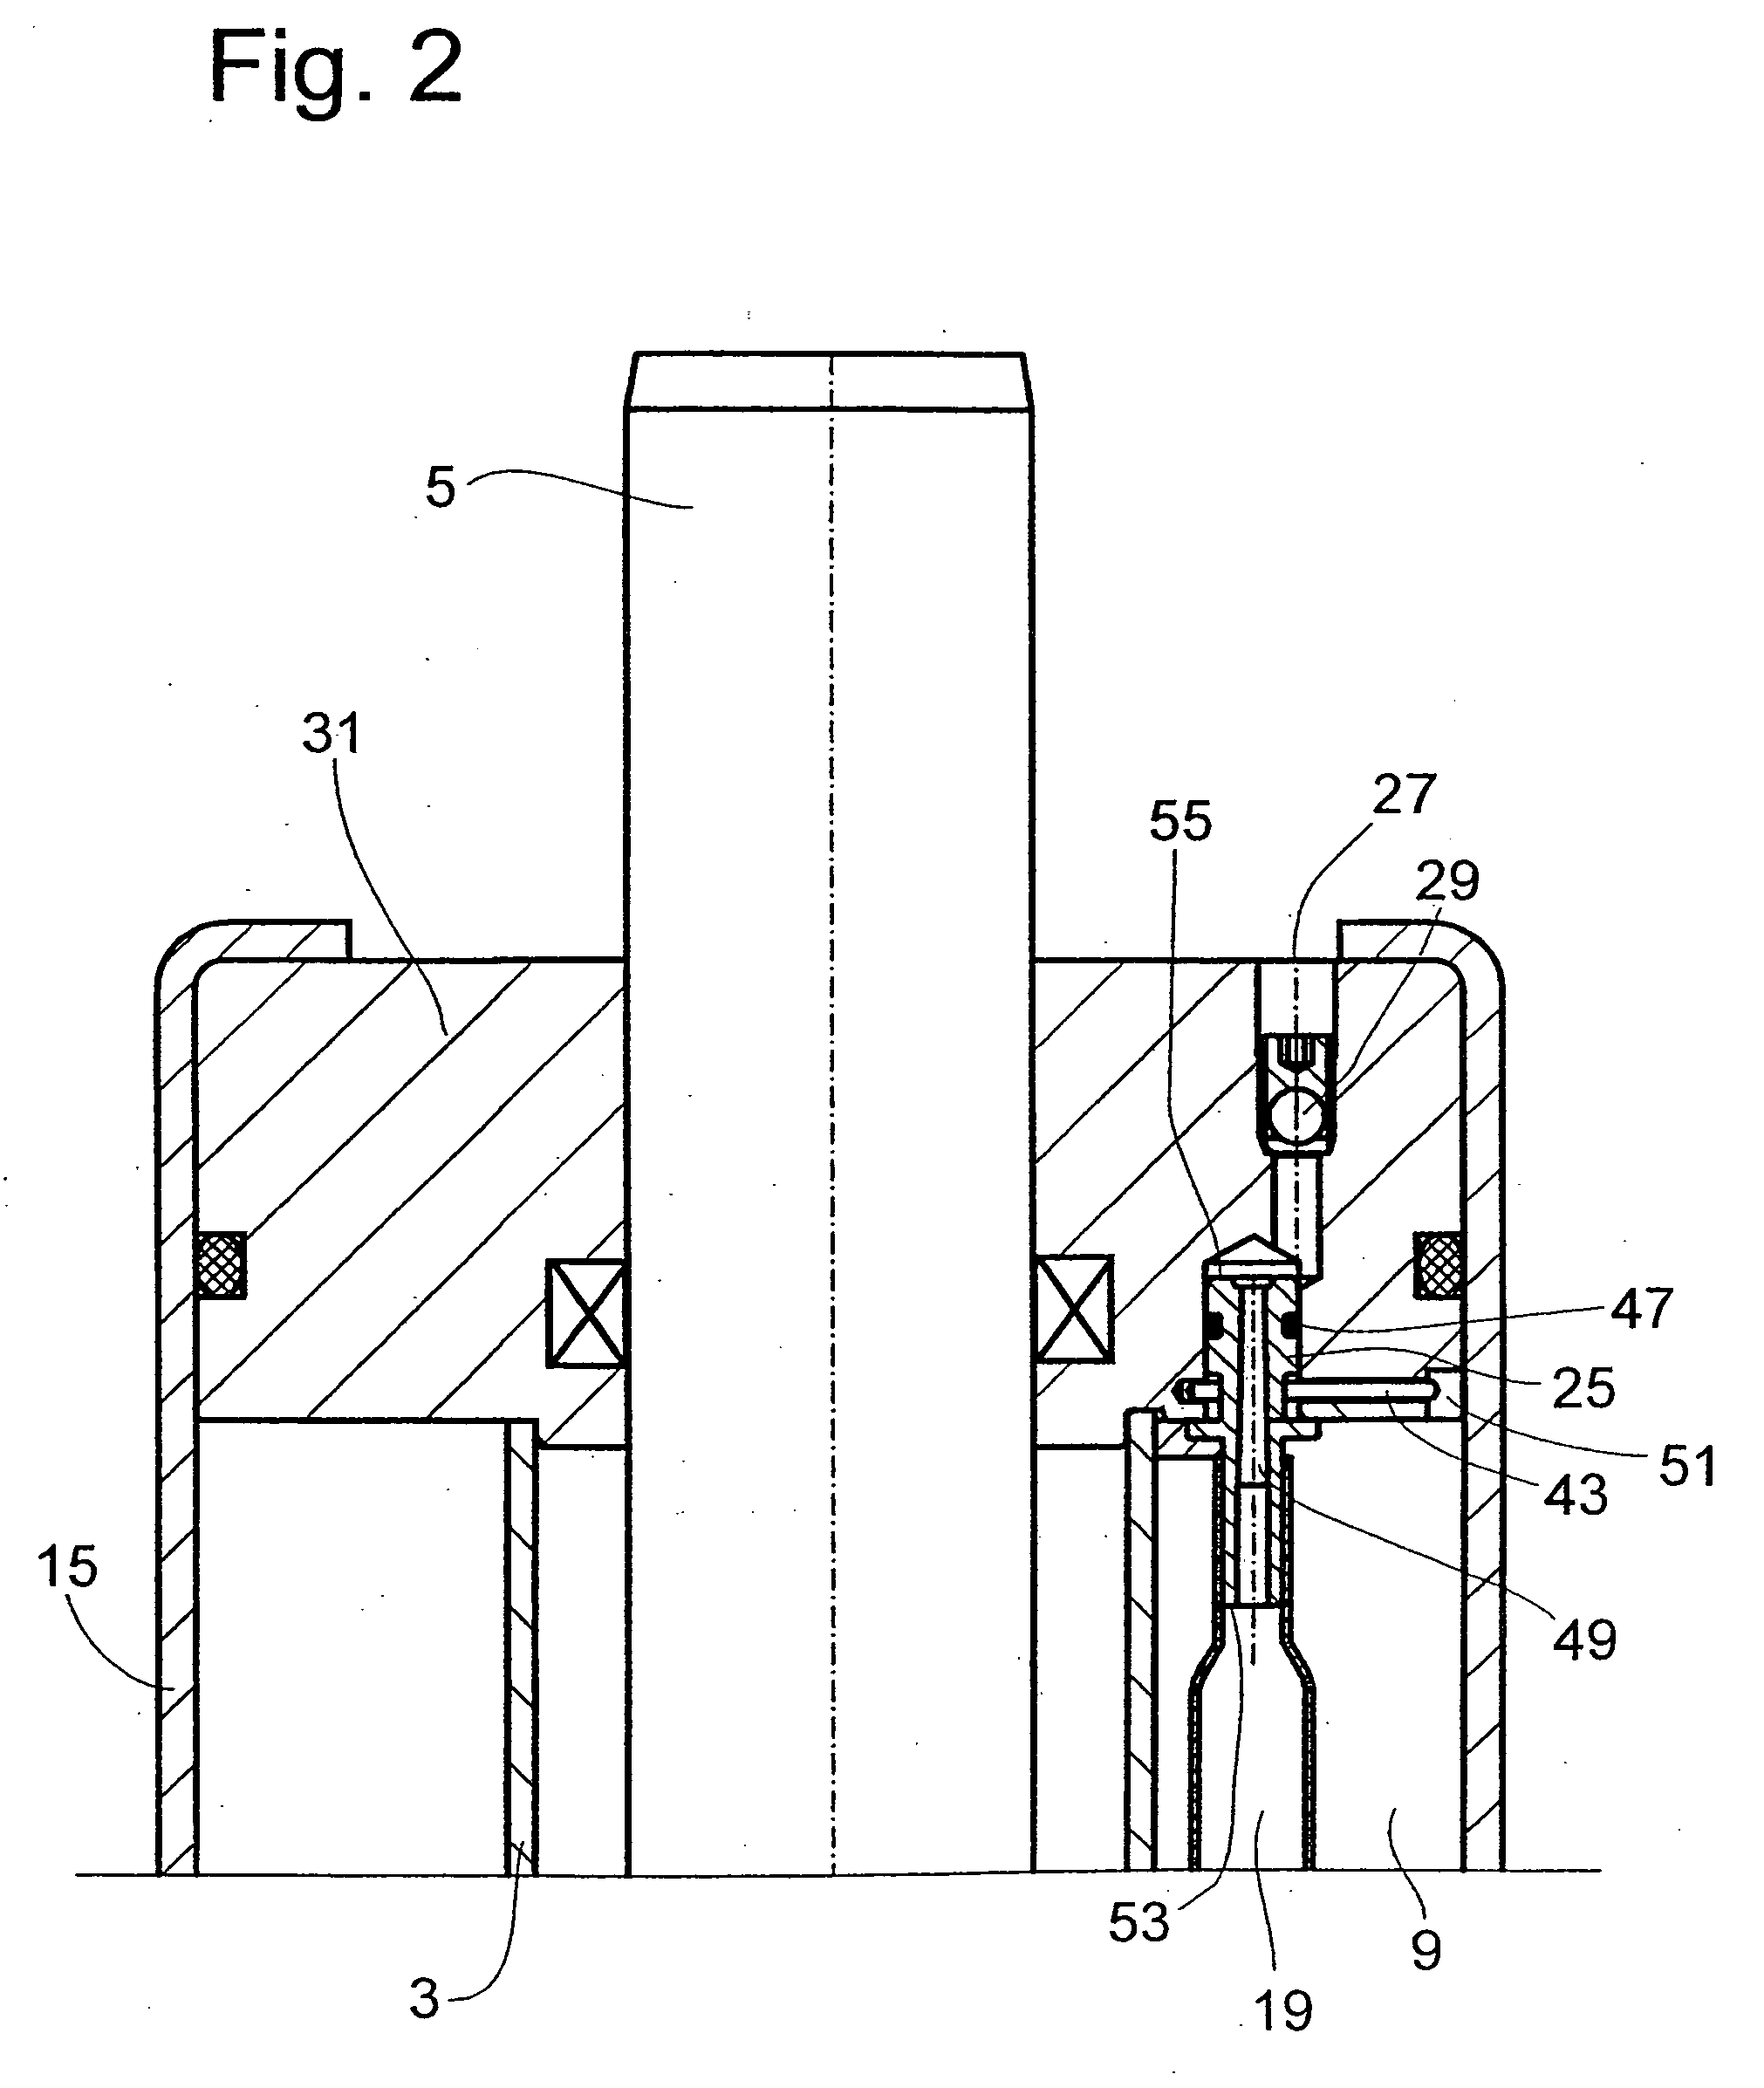 Pressure container in a vibration damper